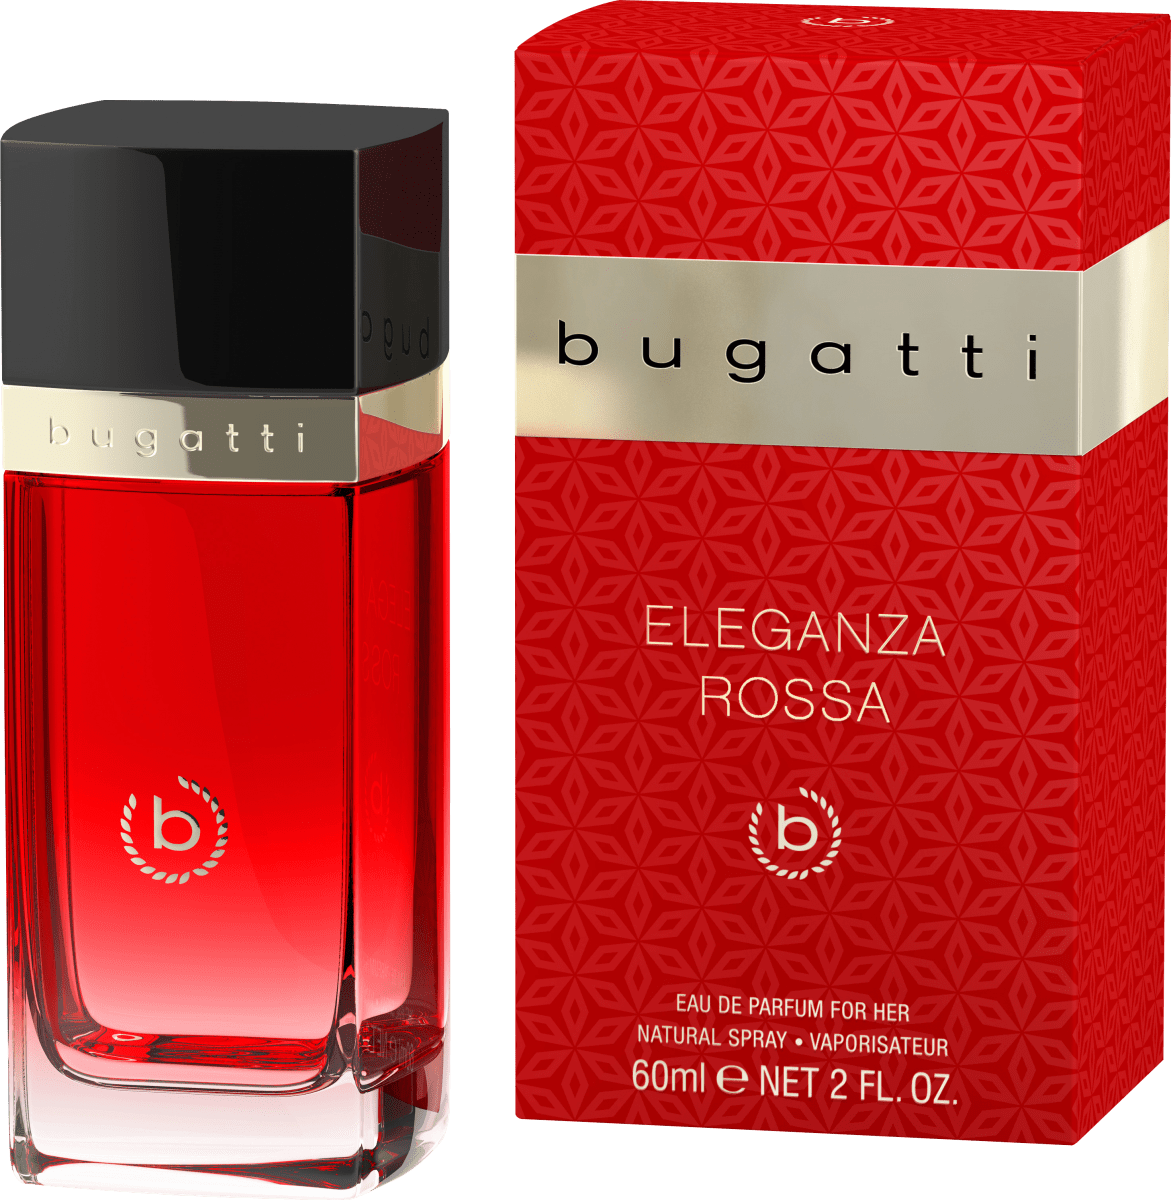 bugatti Eleganza Rossa de ml Eau 60 Parfum